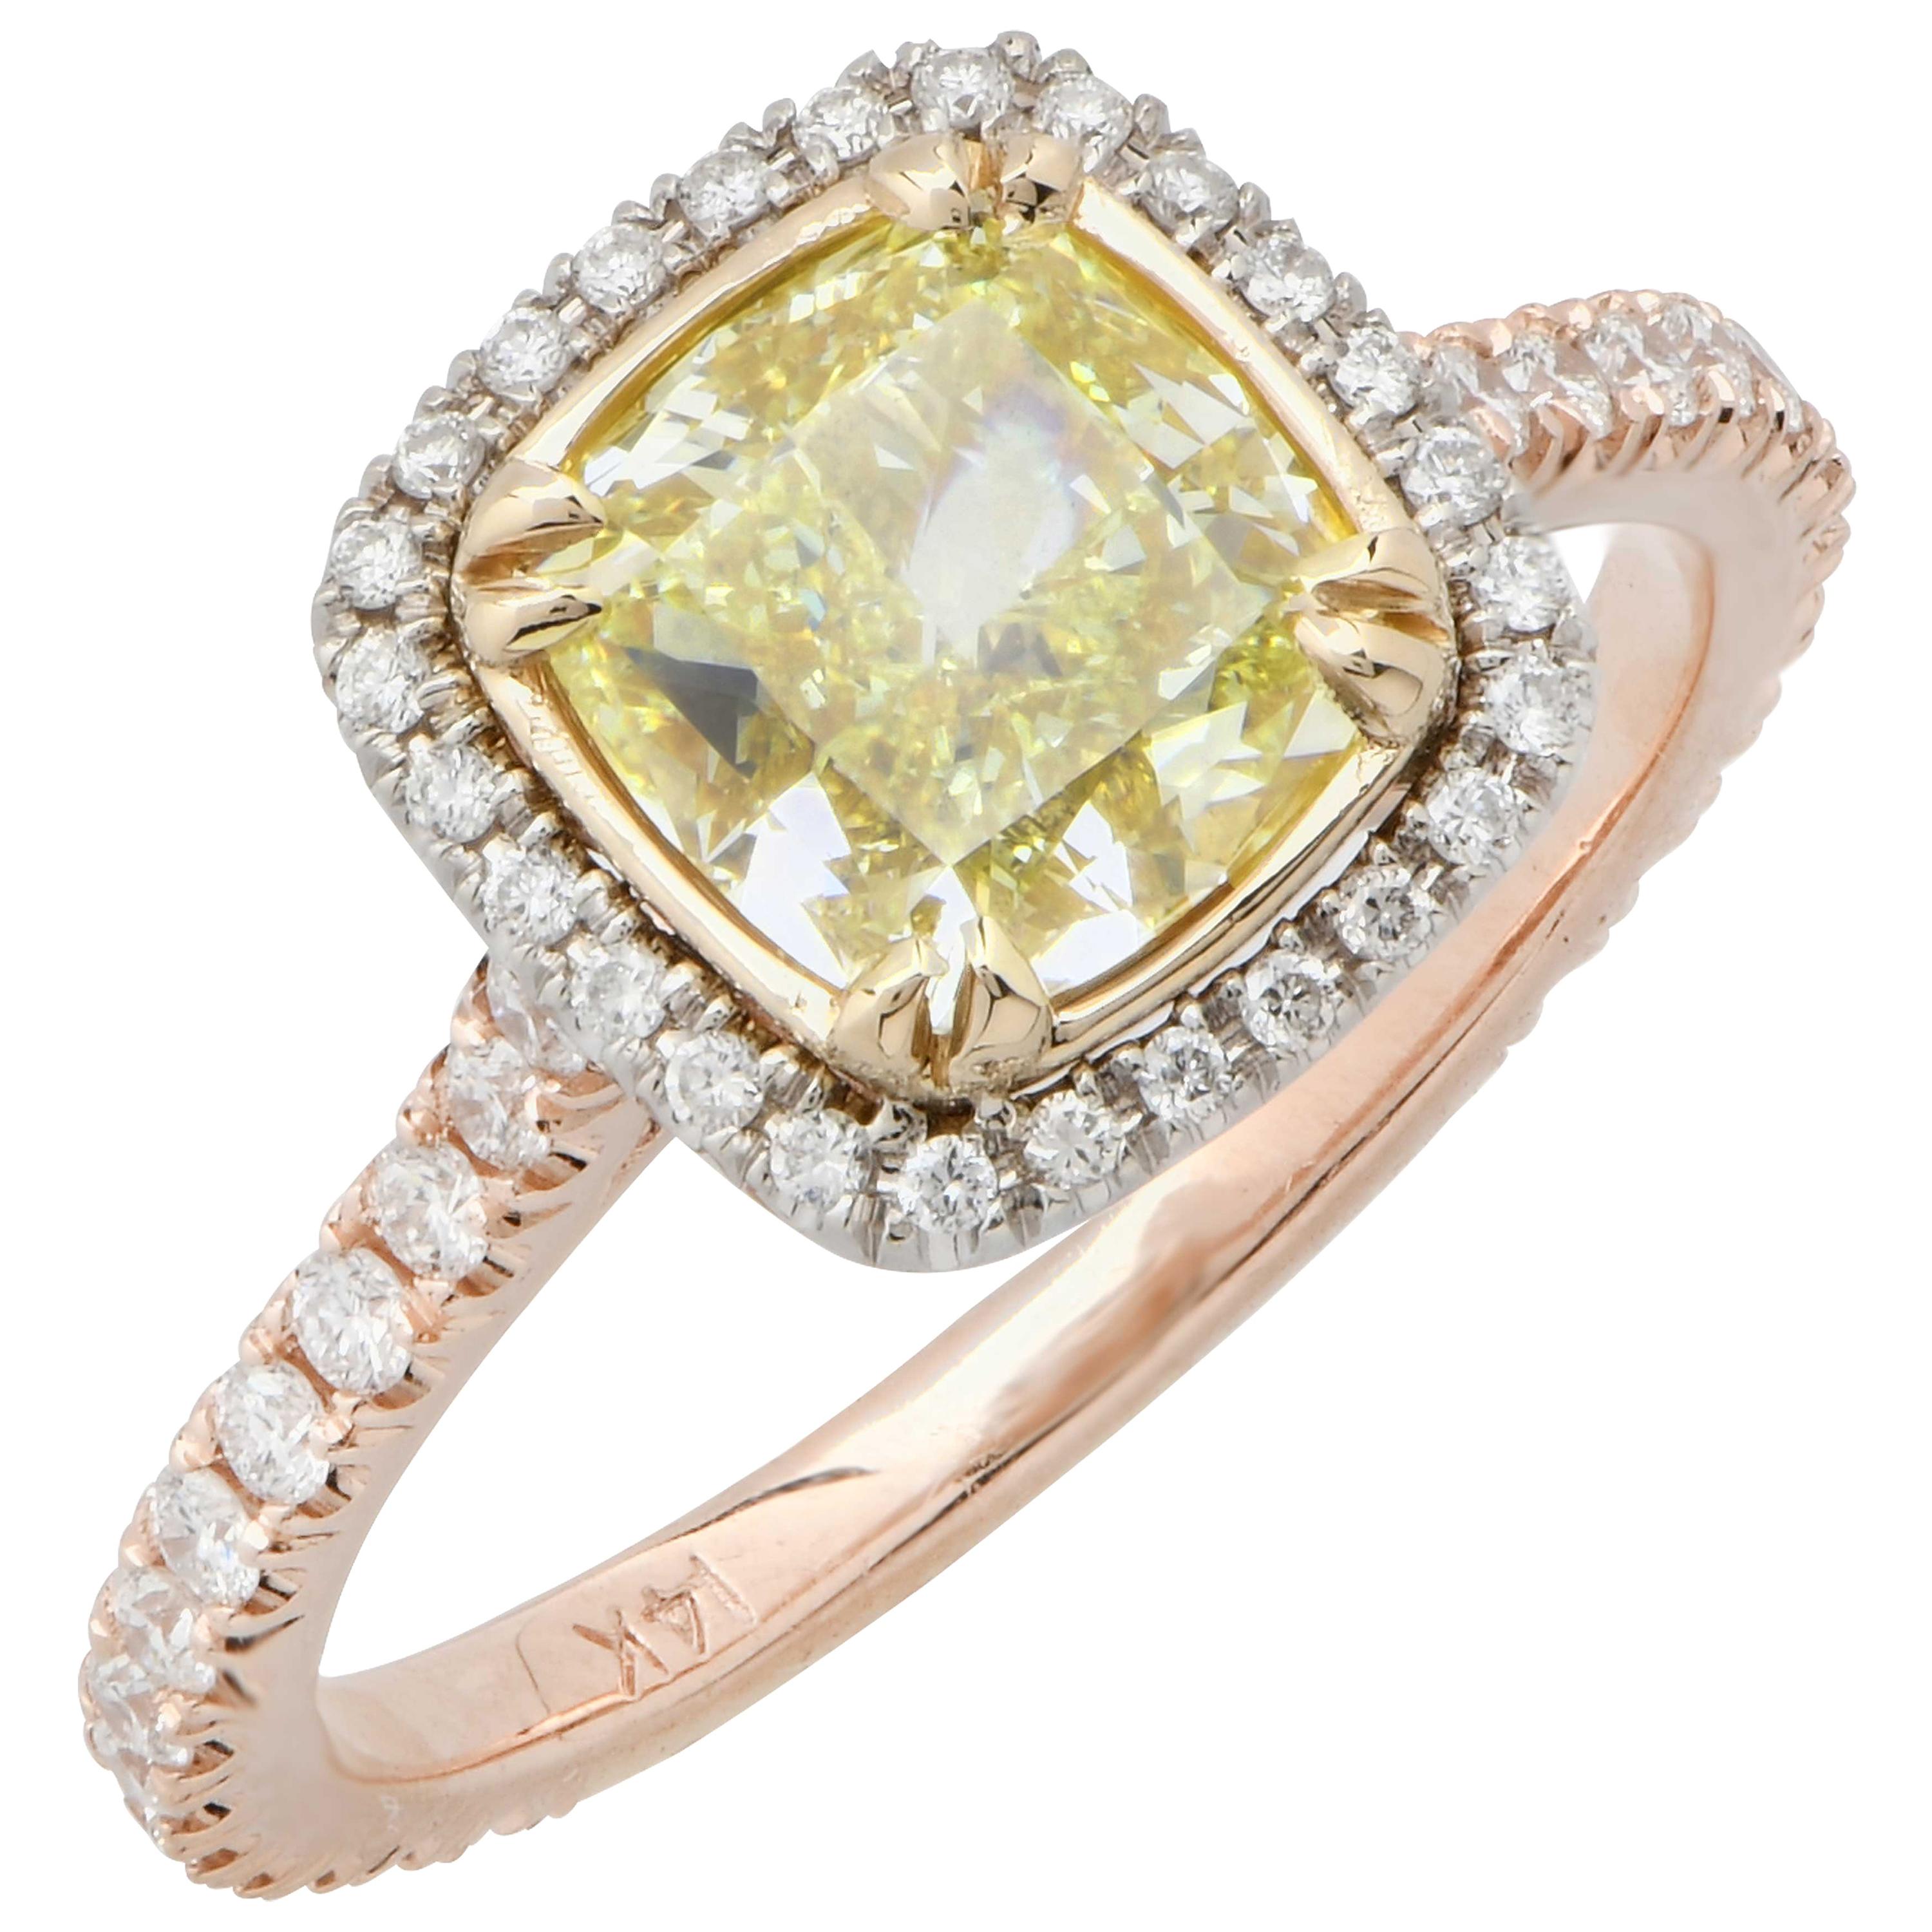 2.22 Carat Light Yellow Cushion Cut Diamond Engagement Ring